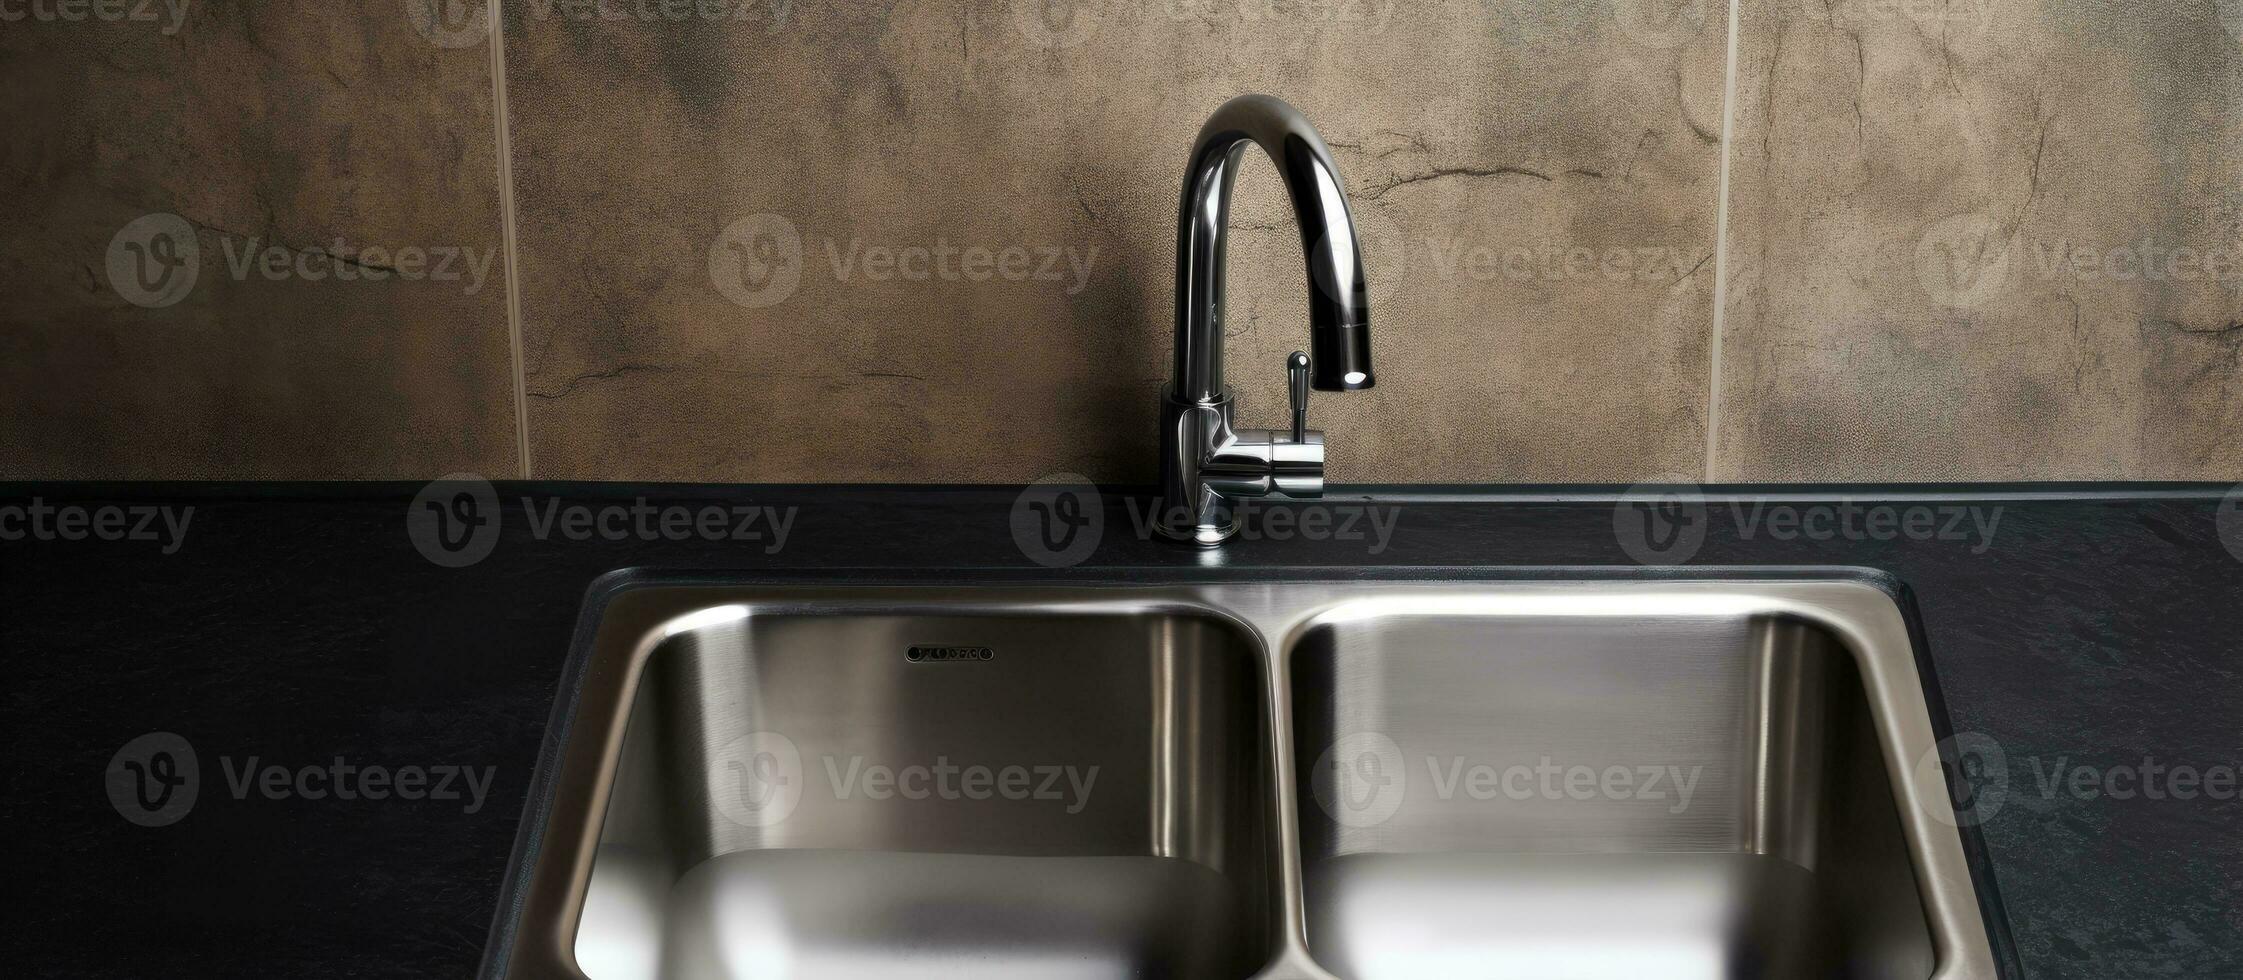 closeup photo of a sink